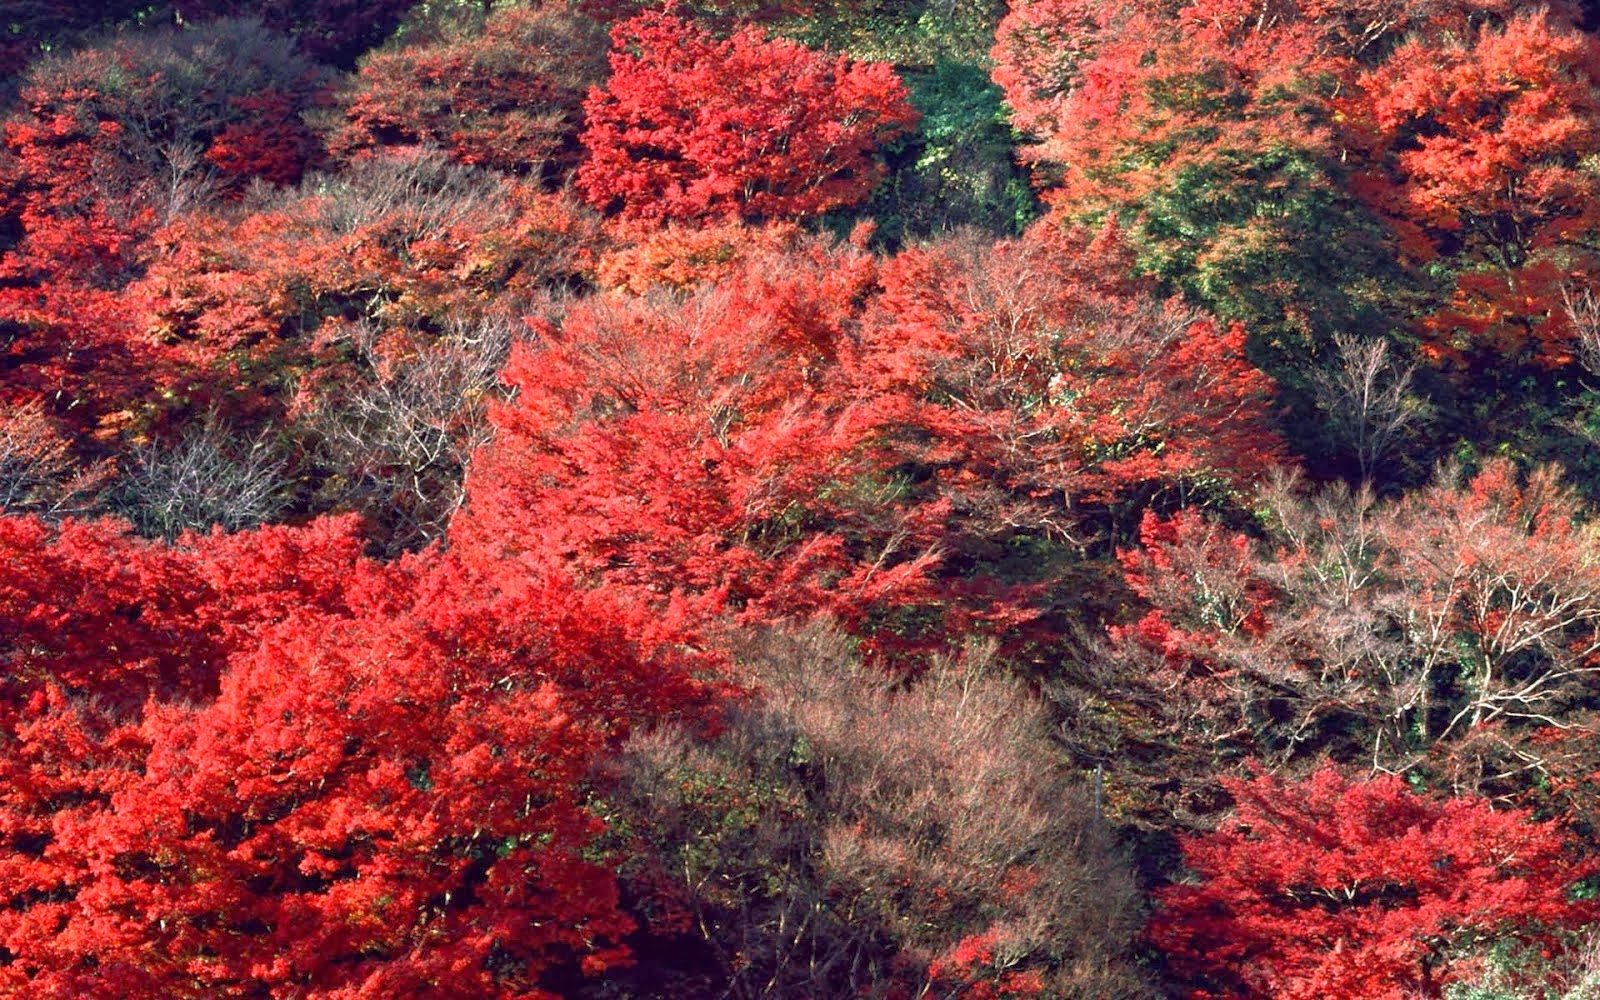 autumn nature hd wallpaper 1080p autumn nature hd wallpaper 1080p